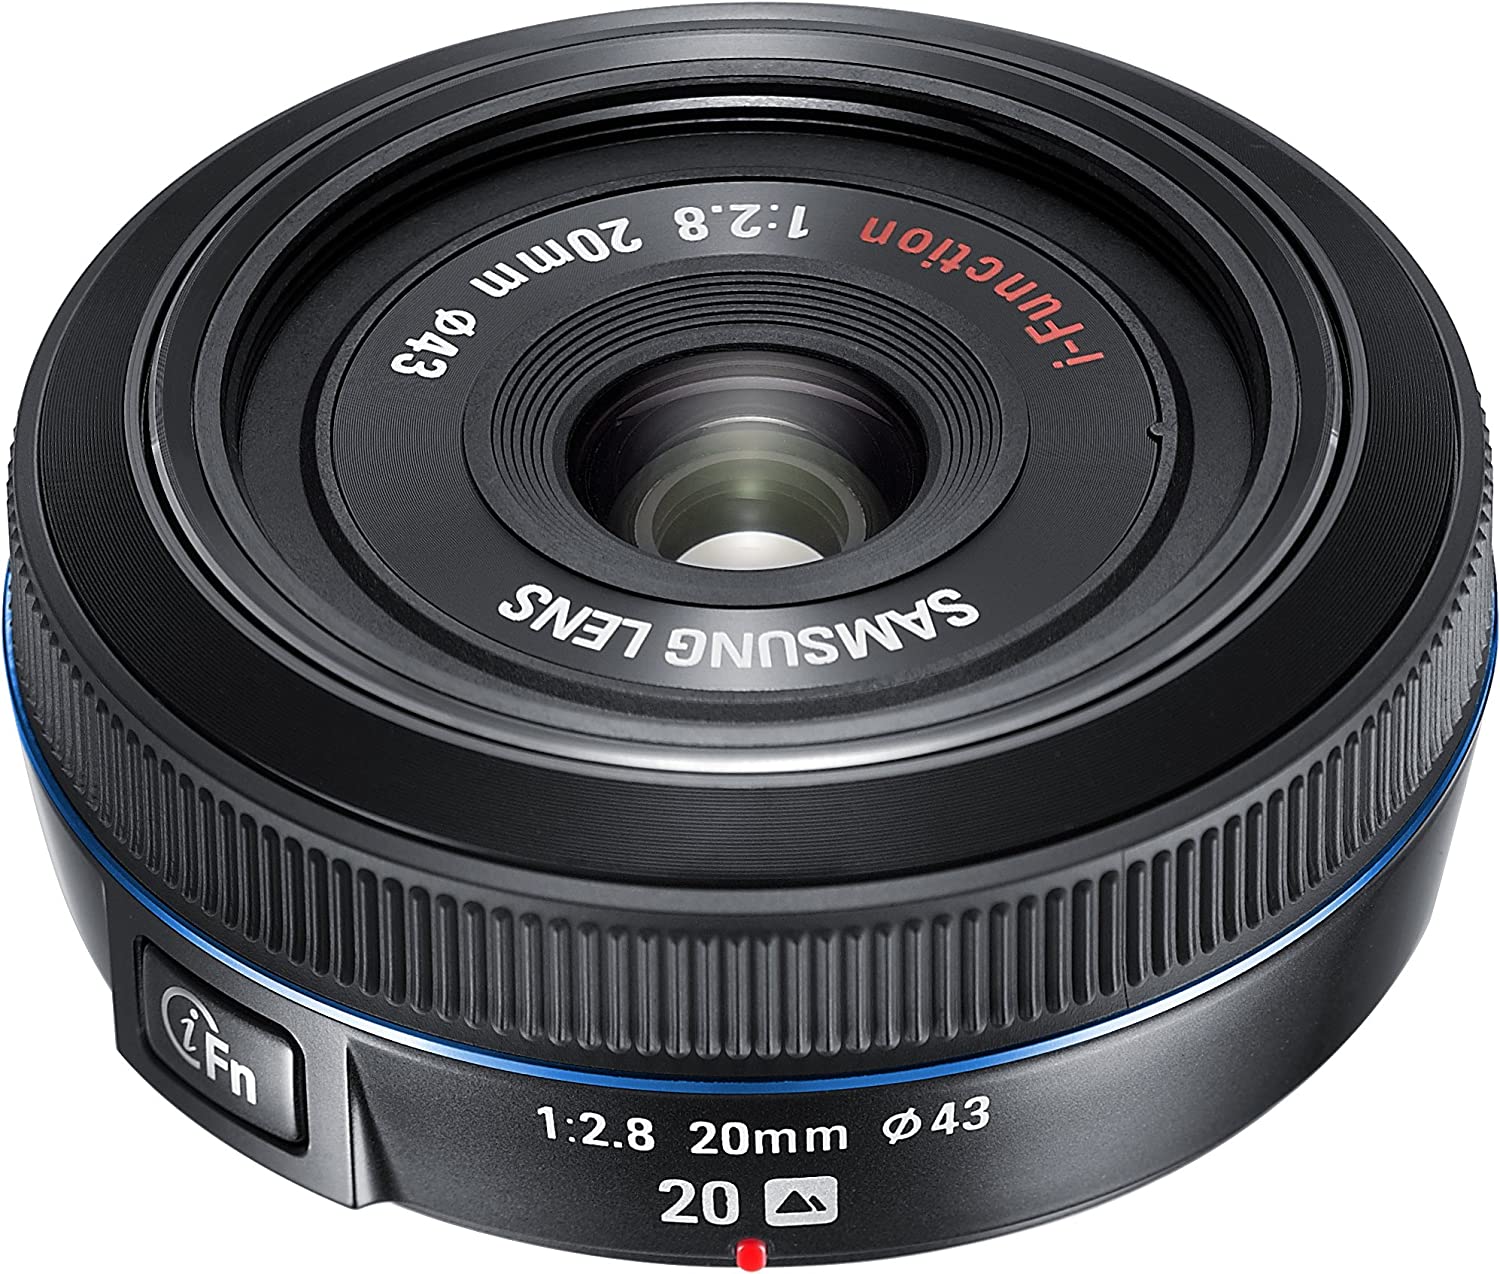 Samsung 20mm F/2.8 Wide Angle Lens For Samsung NX Cameras - (Black) (EX-W20NB)